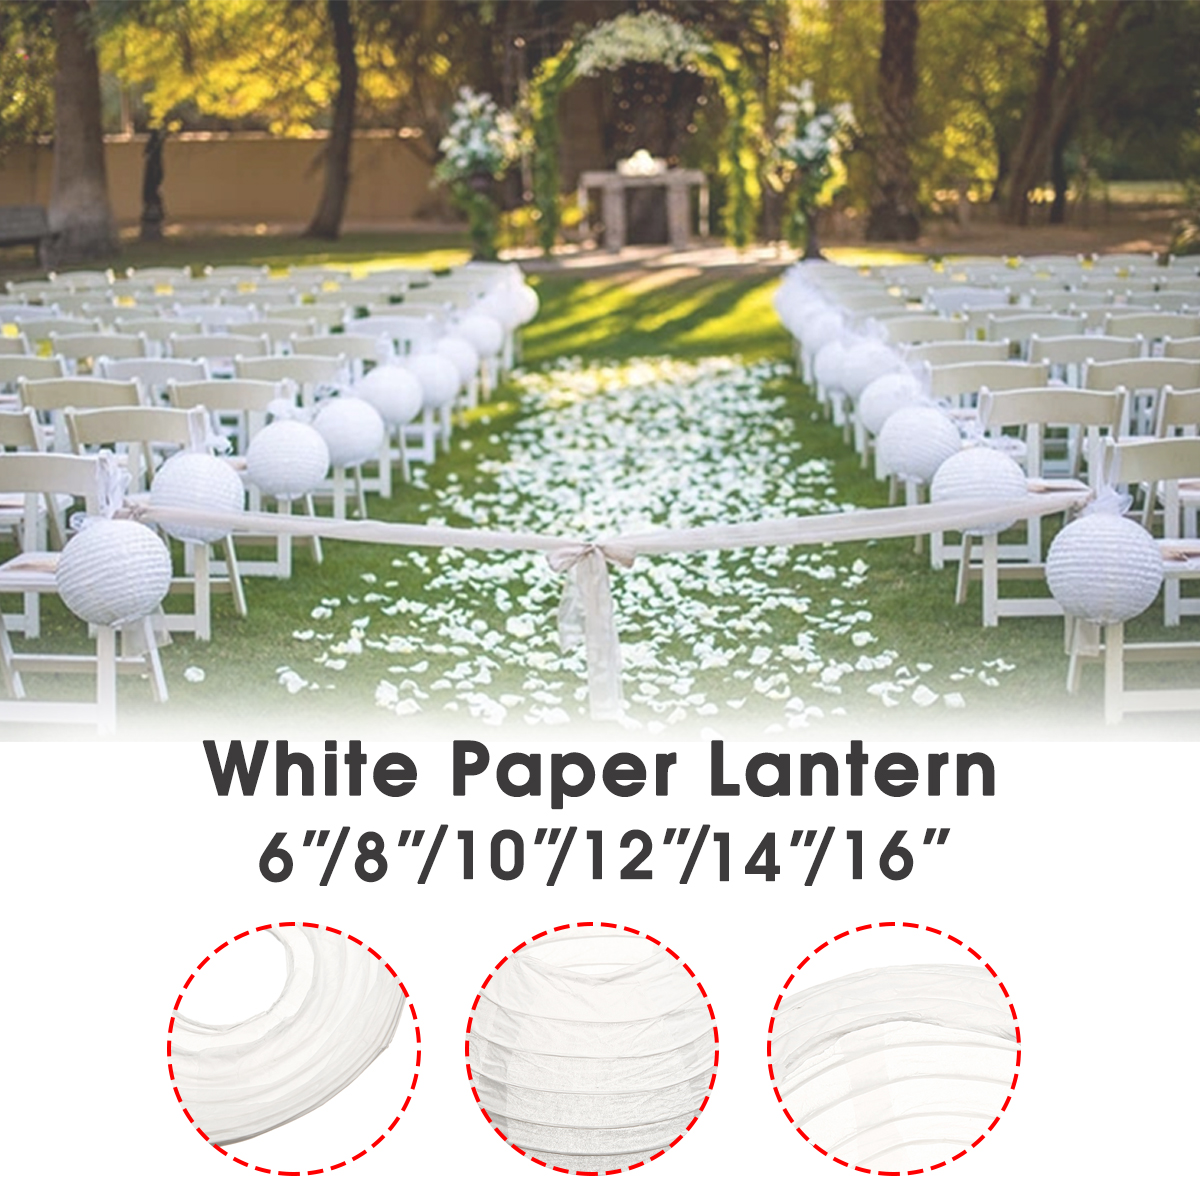 3PCS-White-Round-Paper-Lanterns-Chinese-Hanging-Decorations-Decorative-Lanterns-for-Wedding-Party-De-1634891-1